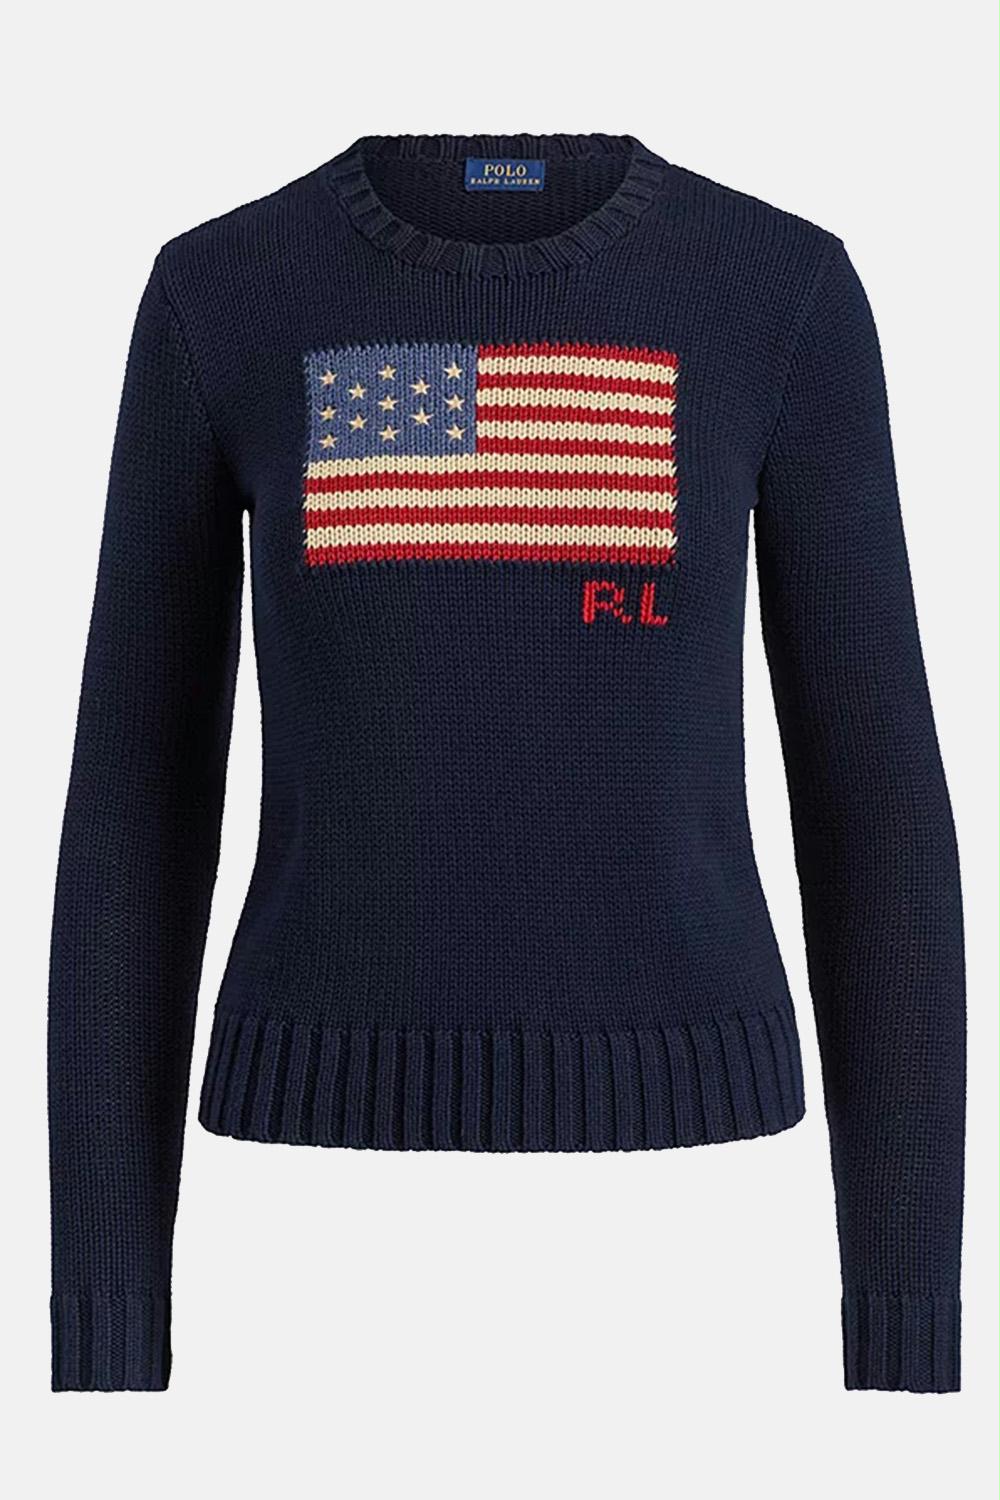 Tegenstrijdigheid Werkgever gerucht Polo Ralph Lauren - Flag Cotton Polo Sweater - Zoetelief Mode